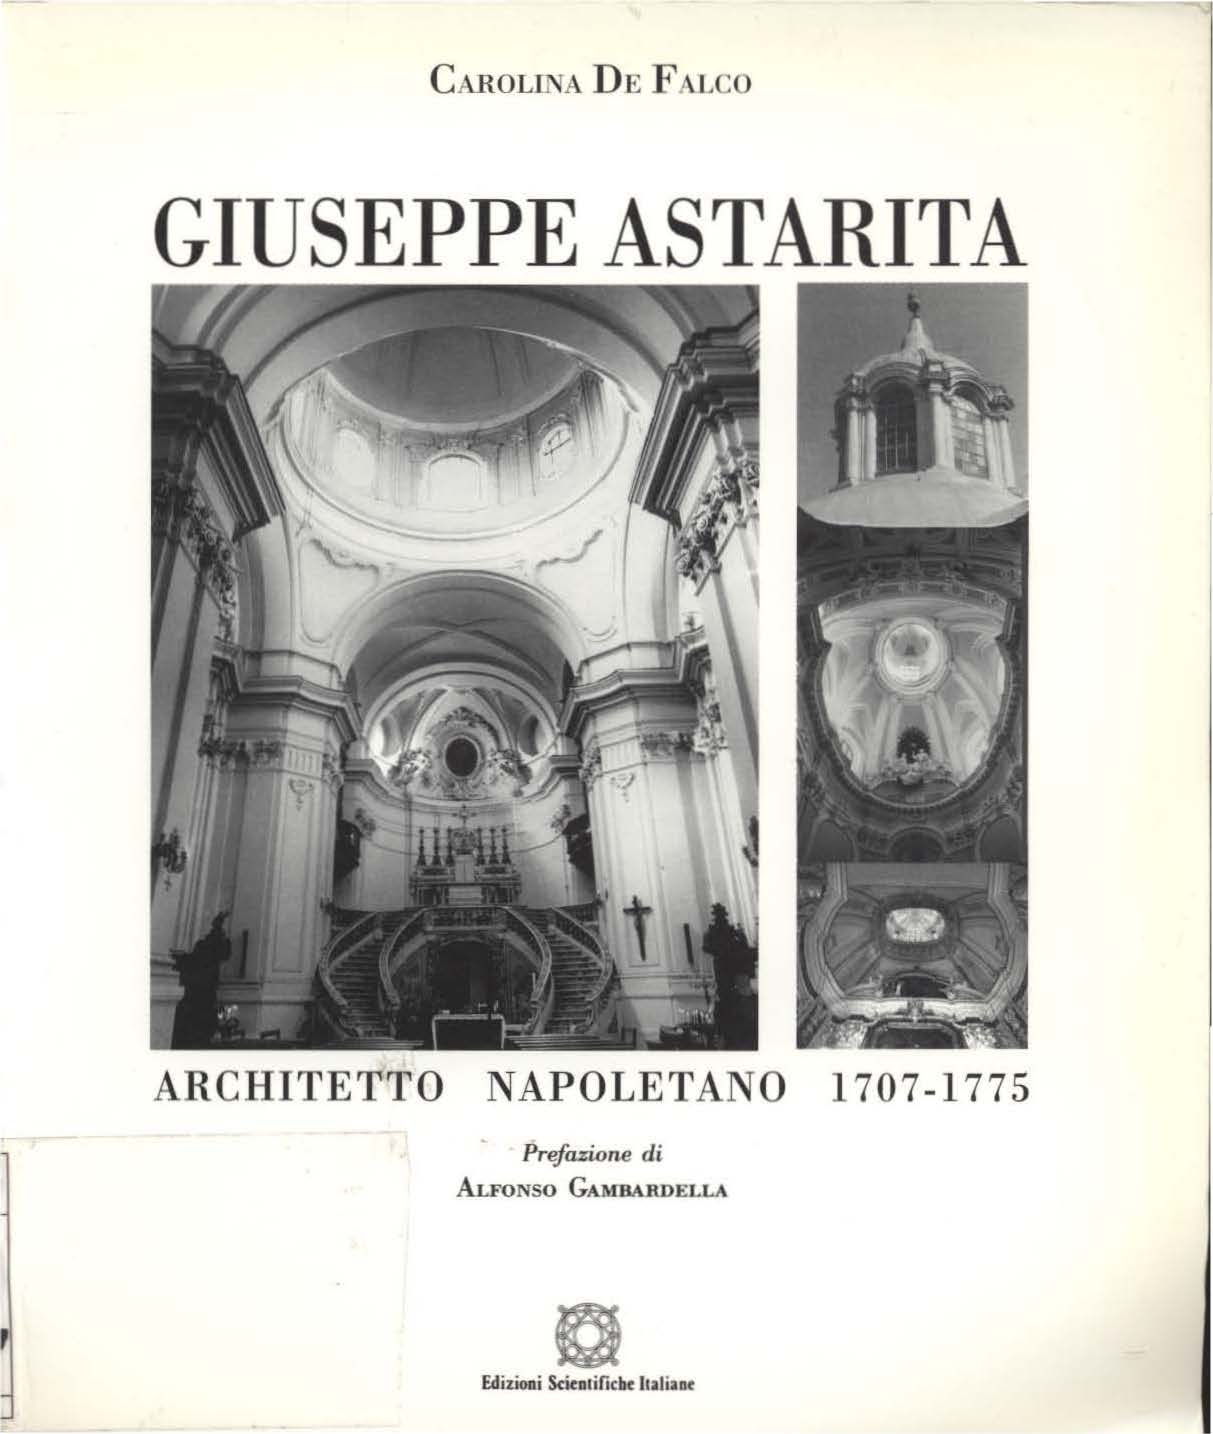 CAROLINA DE F 1\LCO GIUSEPPE ASTARITA ARCHITET1''0 NAPOLETANO